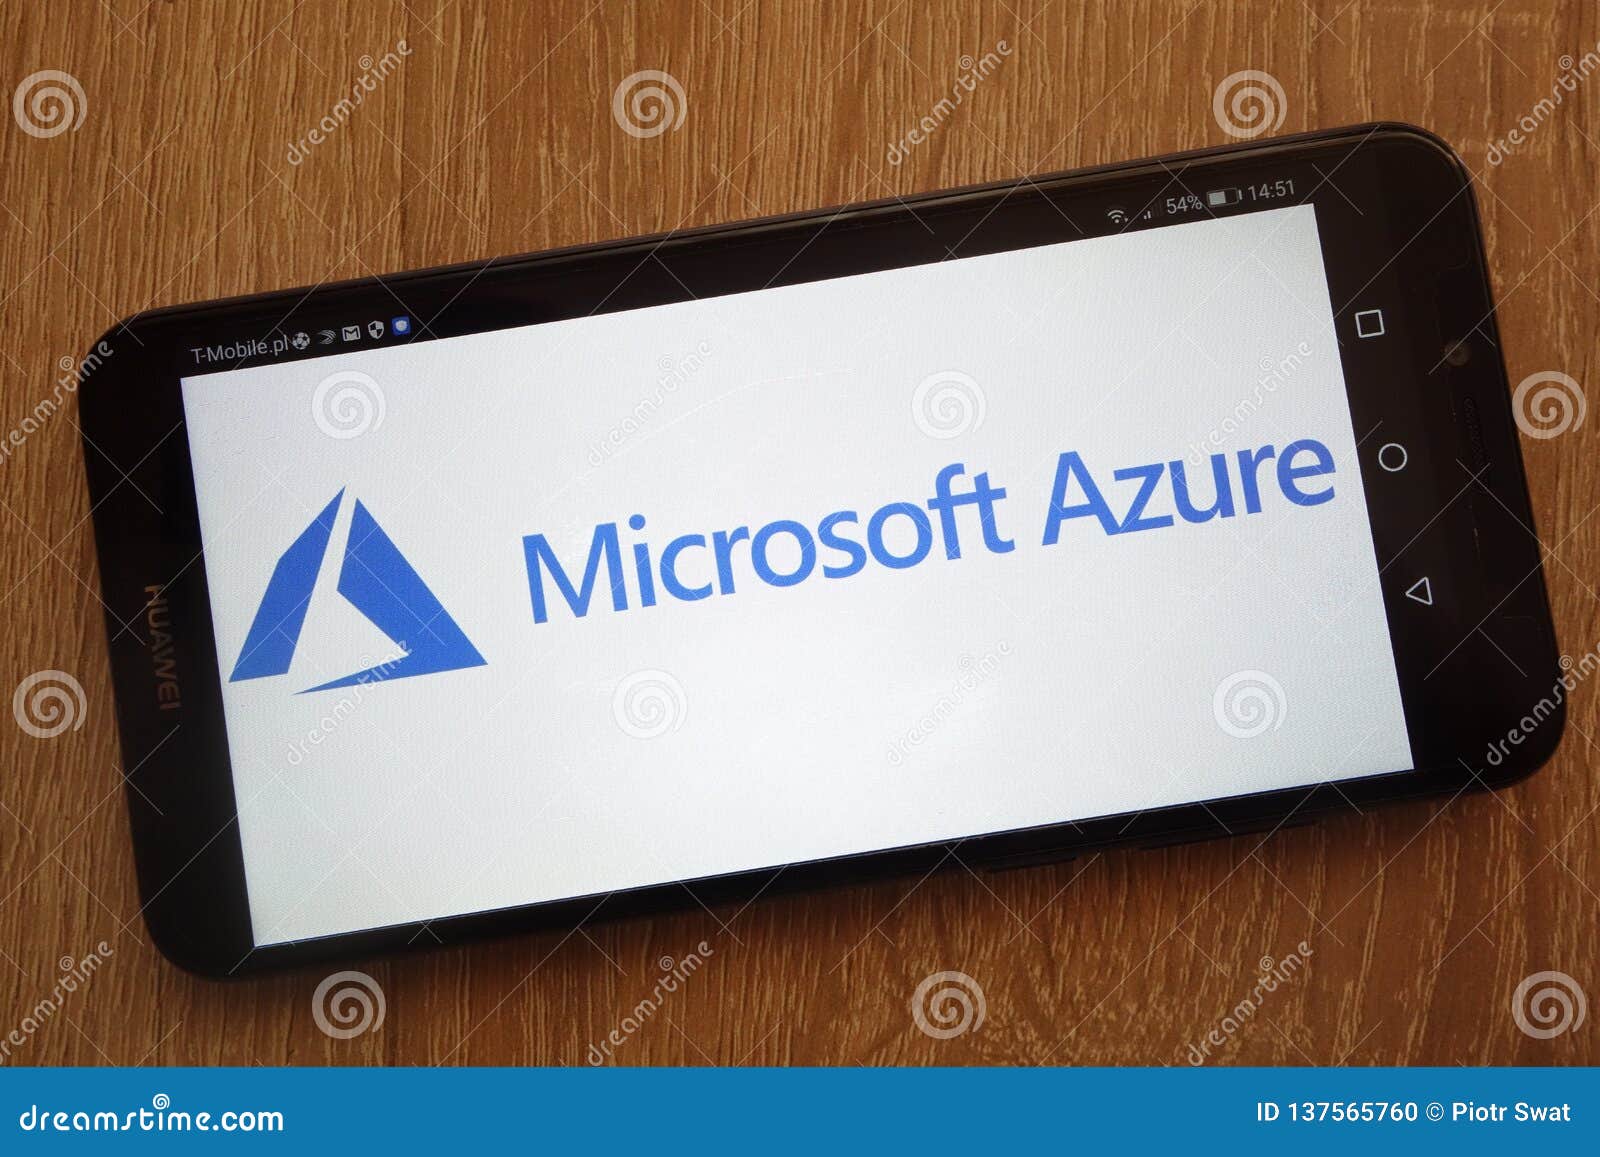 Microsoft Azurelogo som visas på en modern smartphone. KONSKIE POLEN - SEPTEMBER 01, 2018: Microsoft Azurelogo som visas på a 

modern smartphone